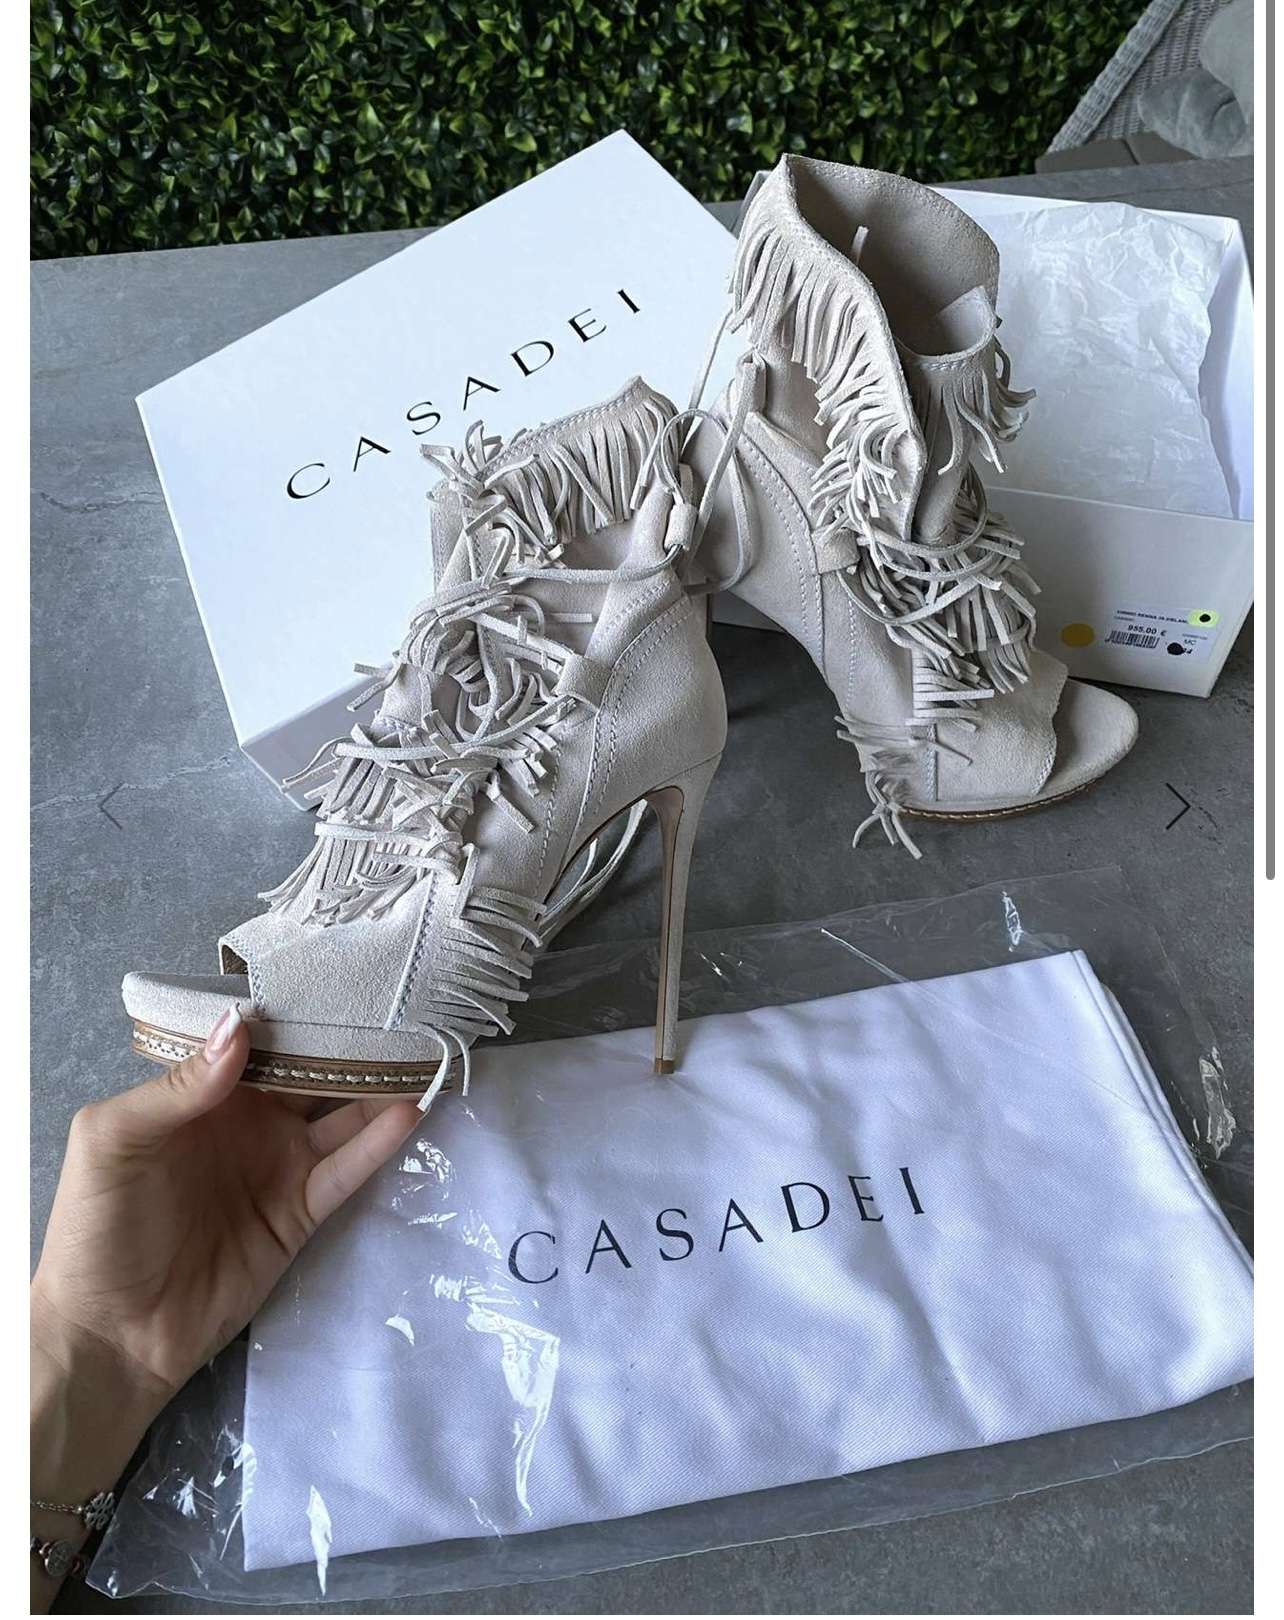 Casadei boots